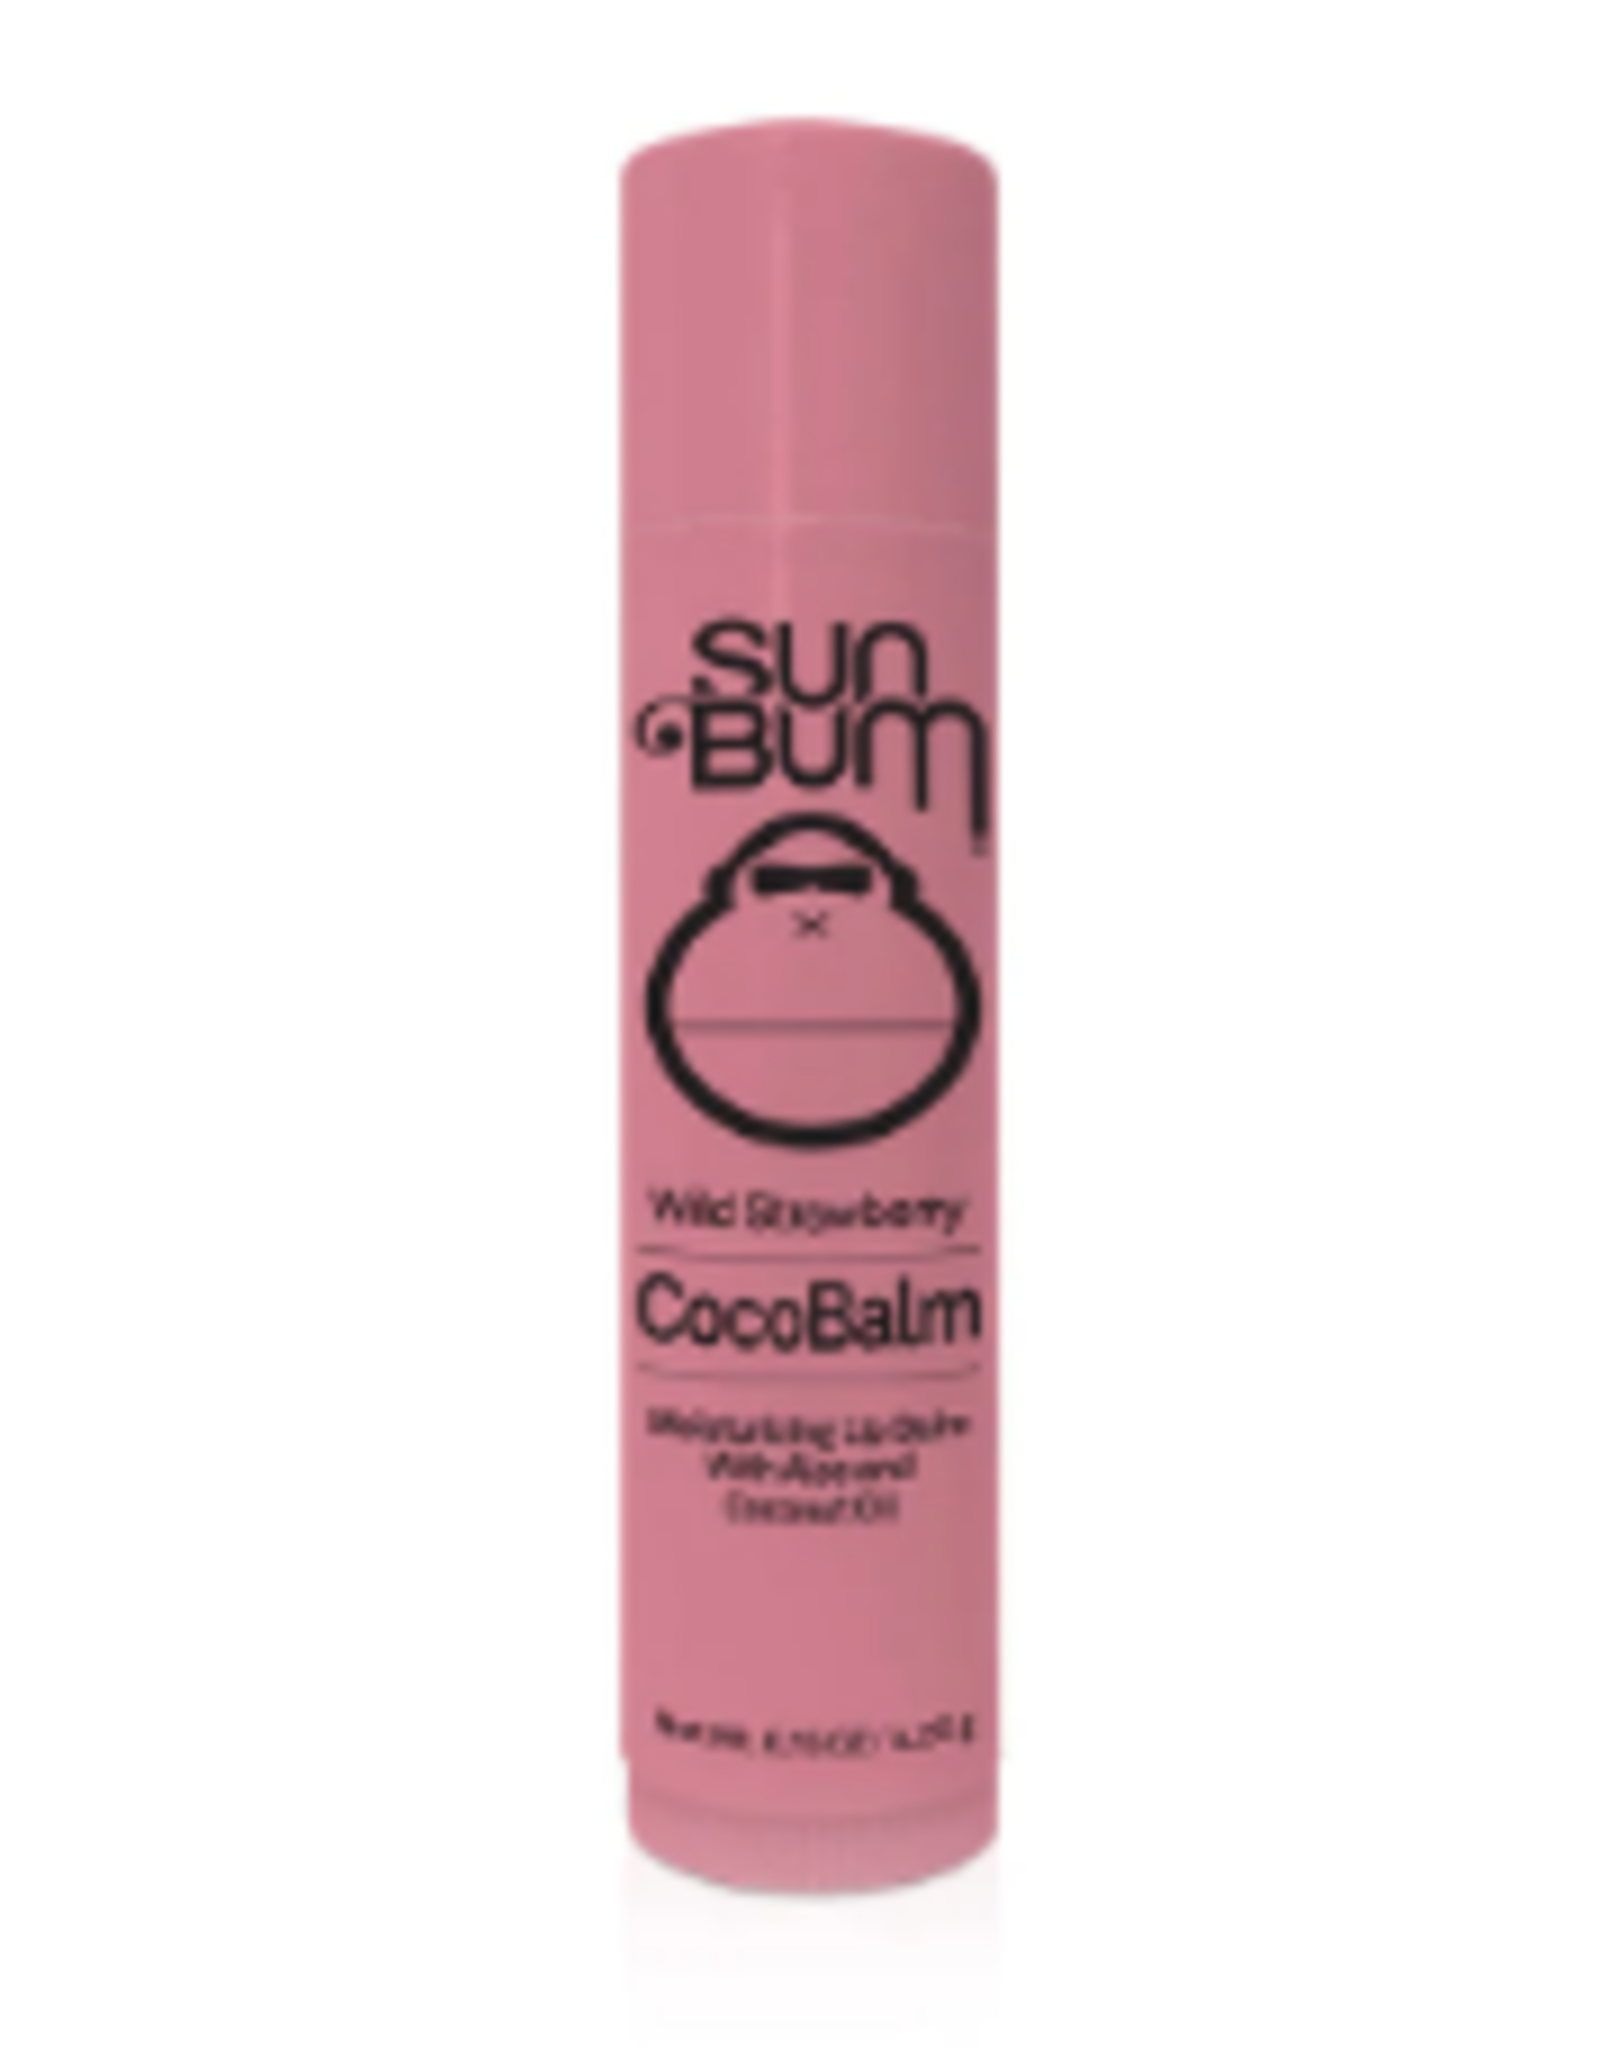 SUN BUM CocoBalm - Wild Strawberry  0.15 oz